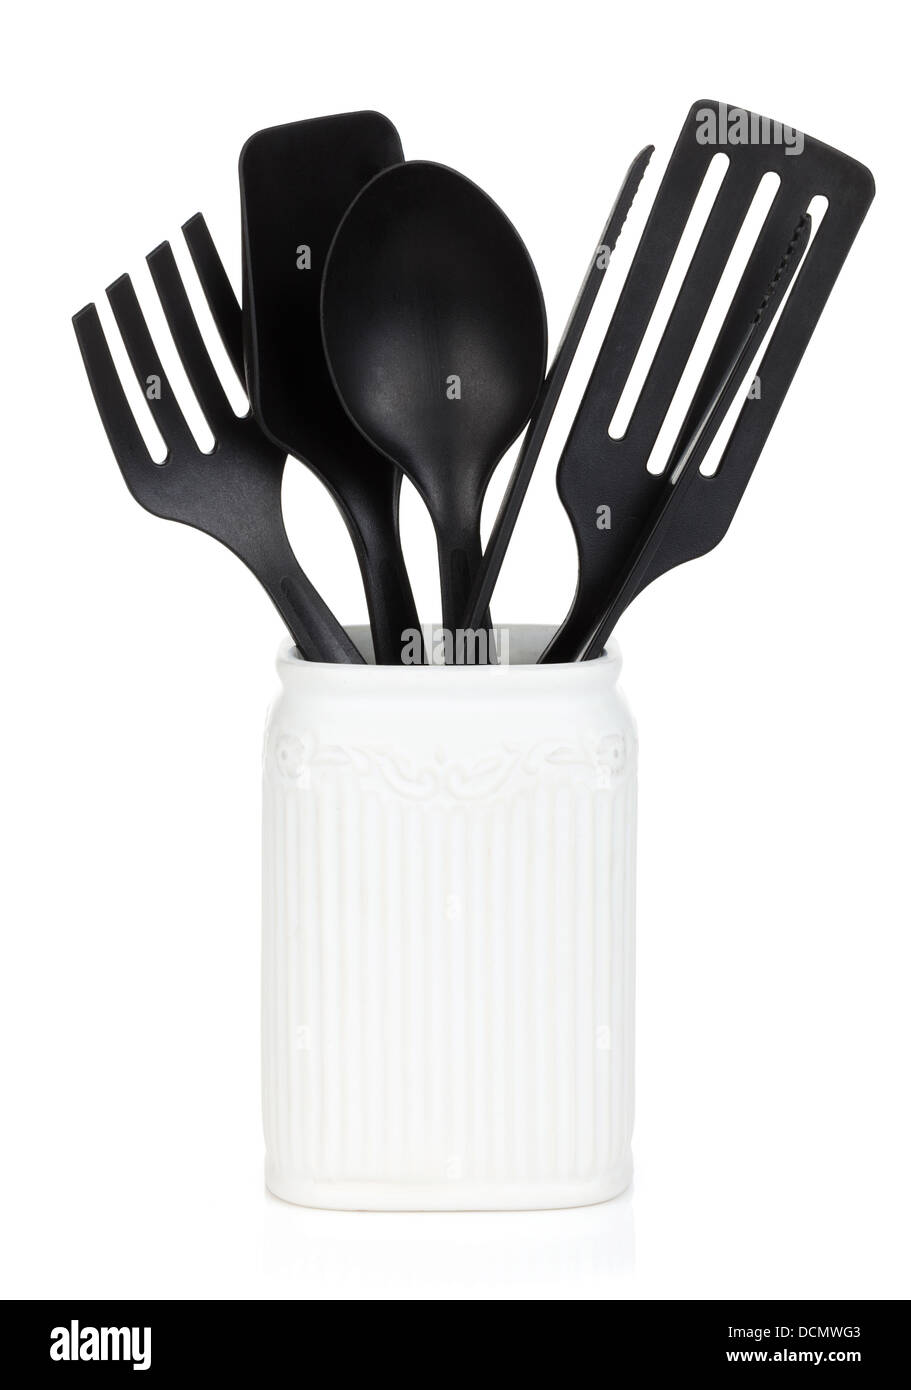 Kitchen utensils in holder. Isolated on white background Stock Photo